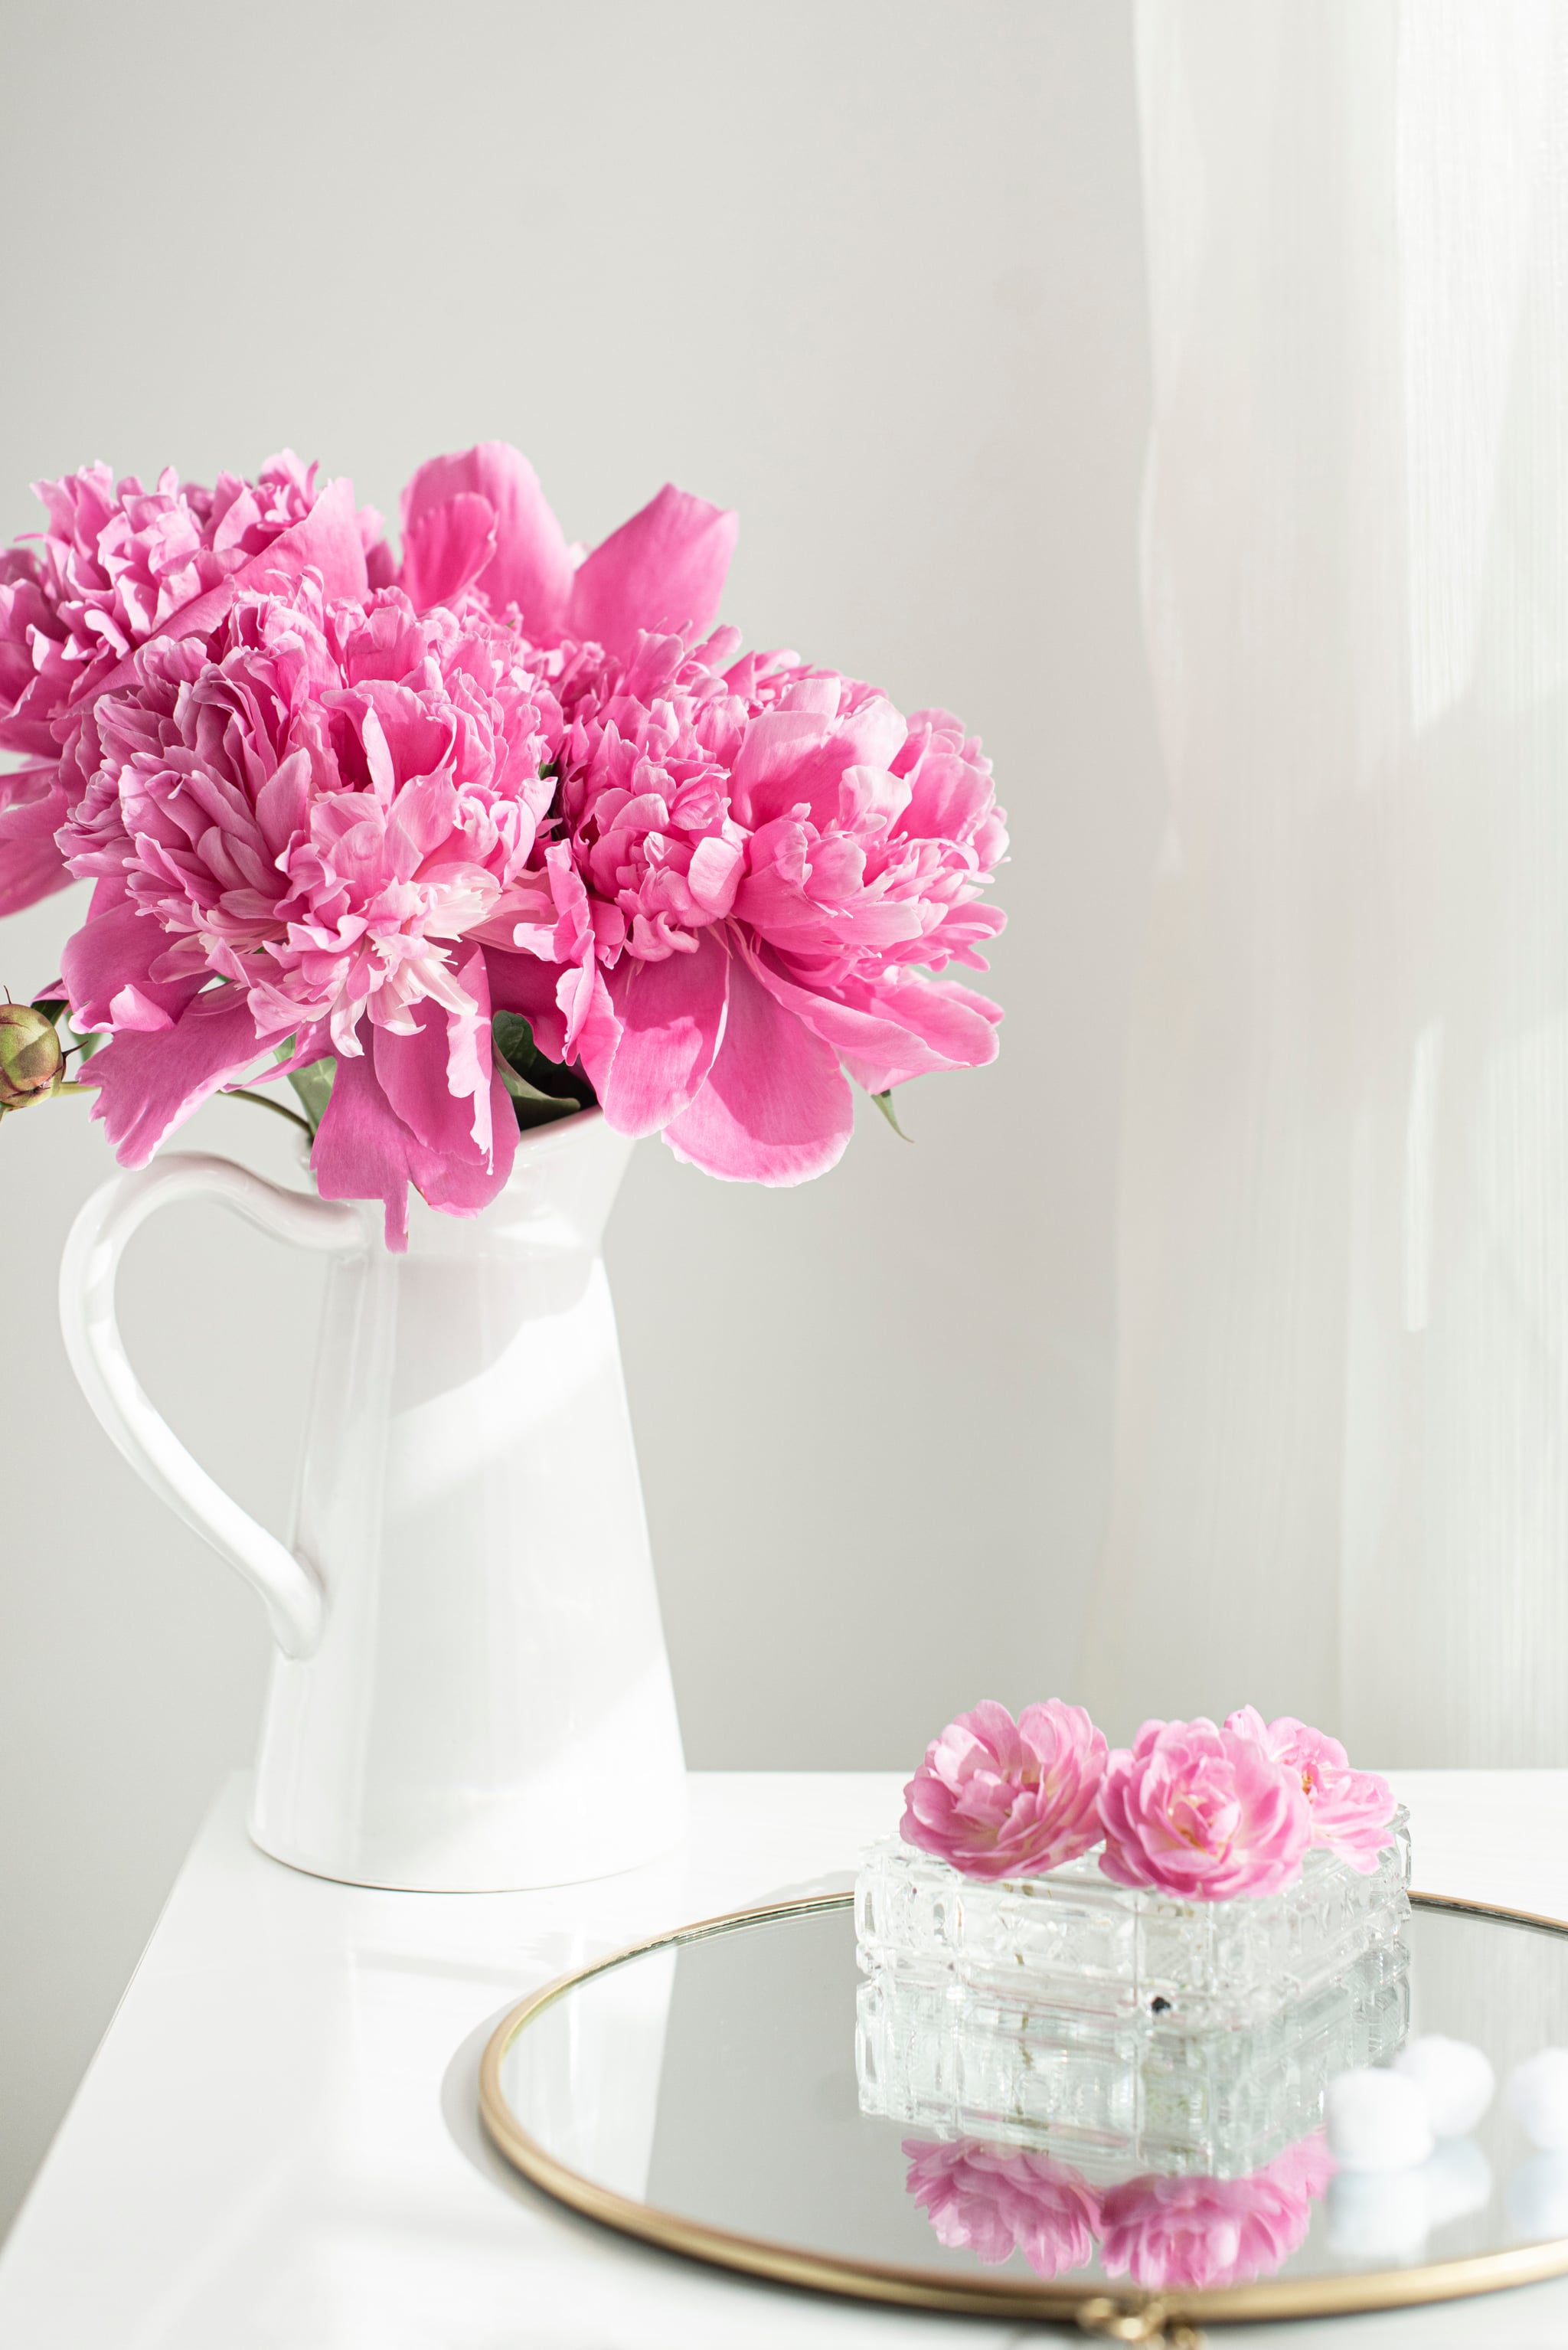 26896 Pink Flower 3d Wallpaper Images Stock Photos  Vectors   Shutterstock